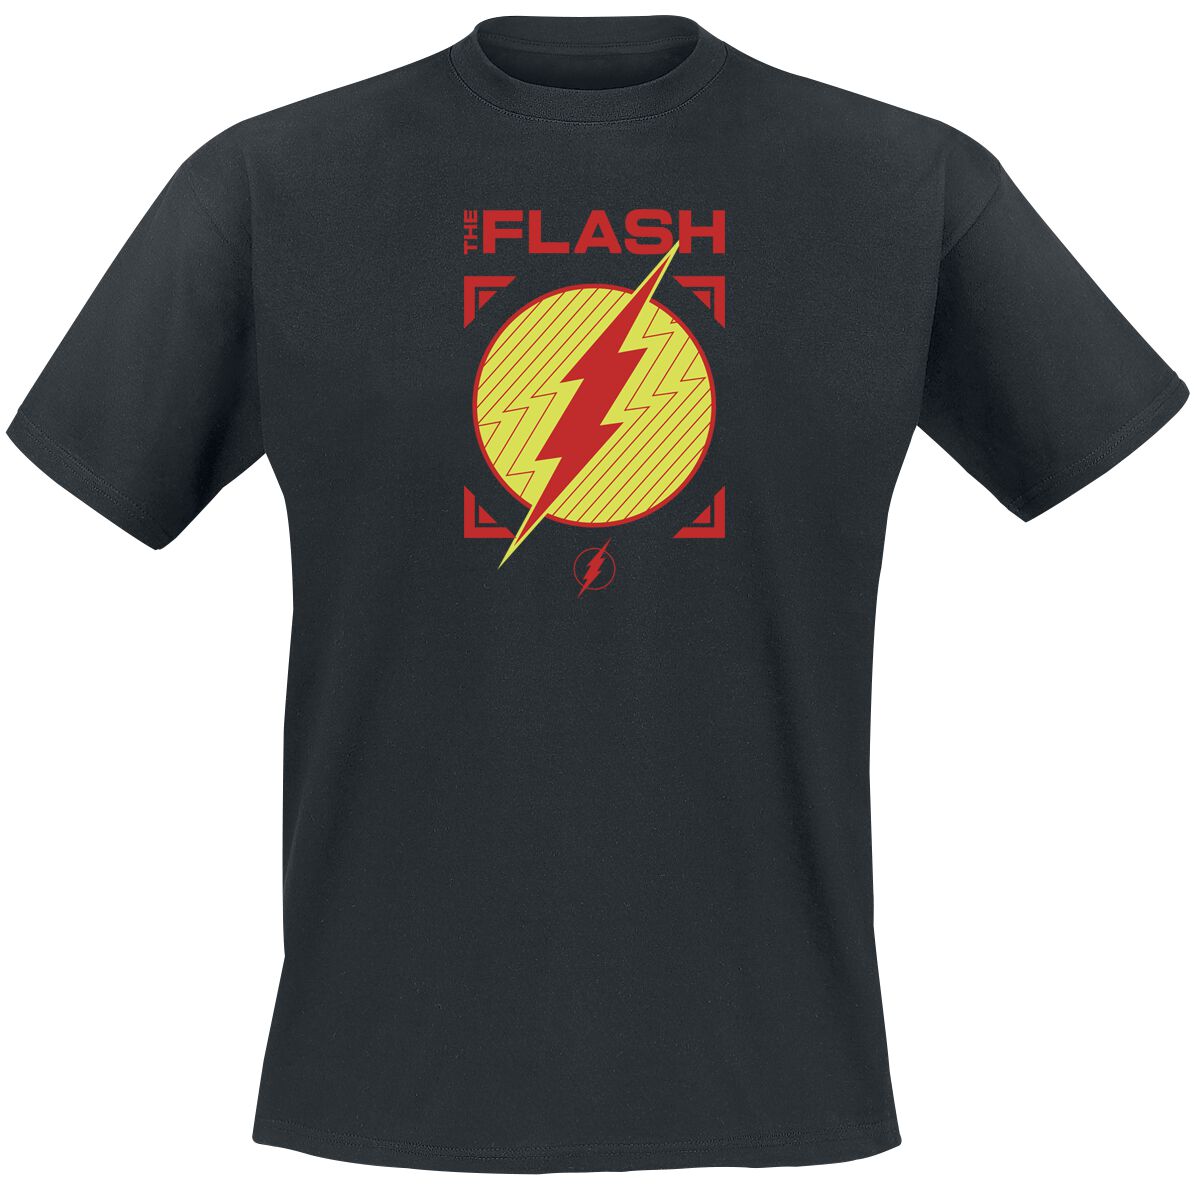 The Flash Flash - Central City All Stars T-Shirt schwarz in XXL